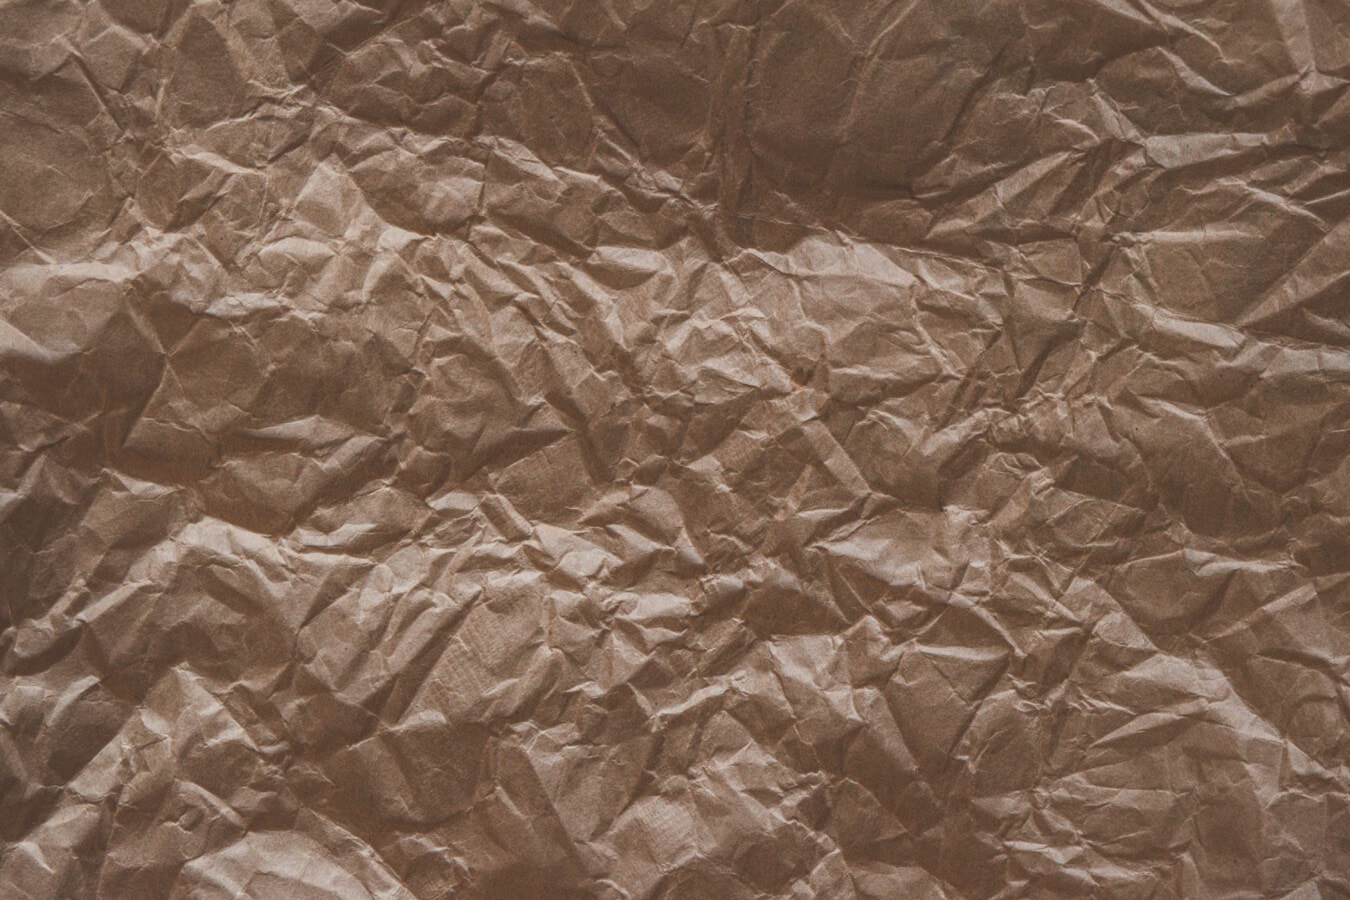 papel, textura, marrom claro, marrom, perto, material, superfície, áspero, padrão, velho